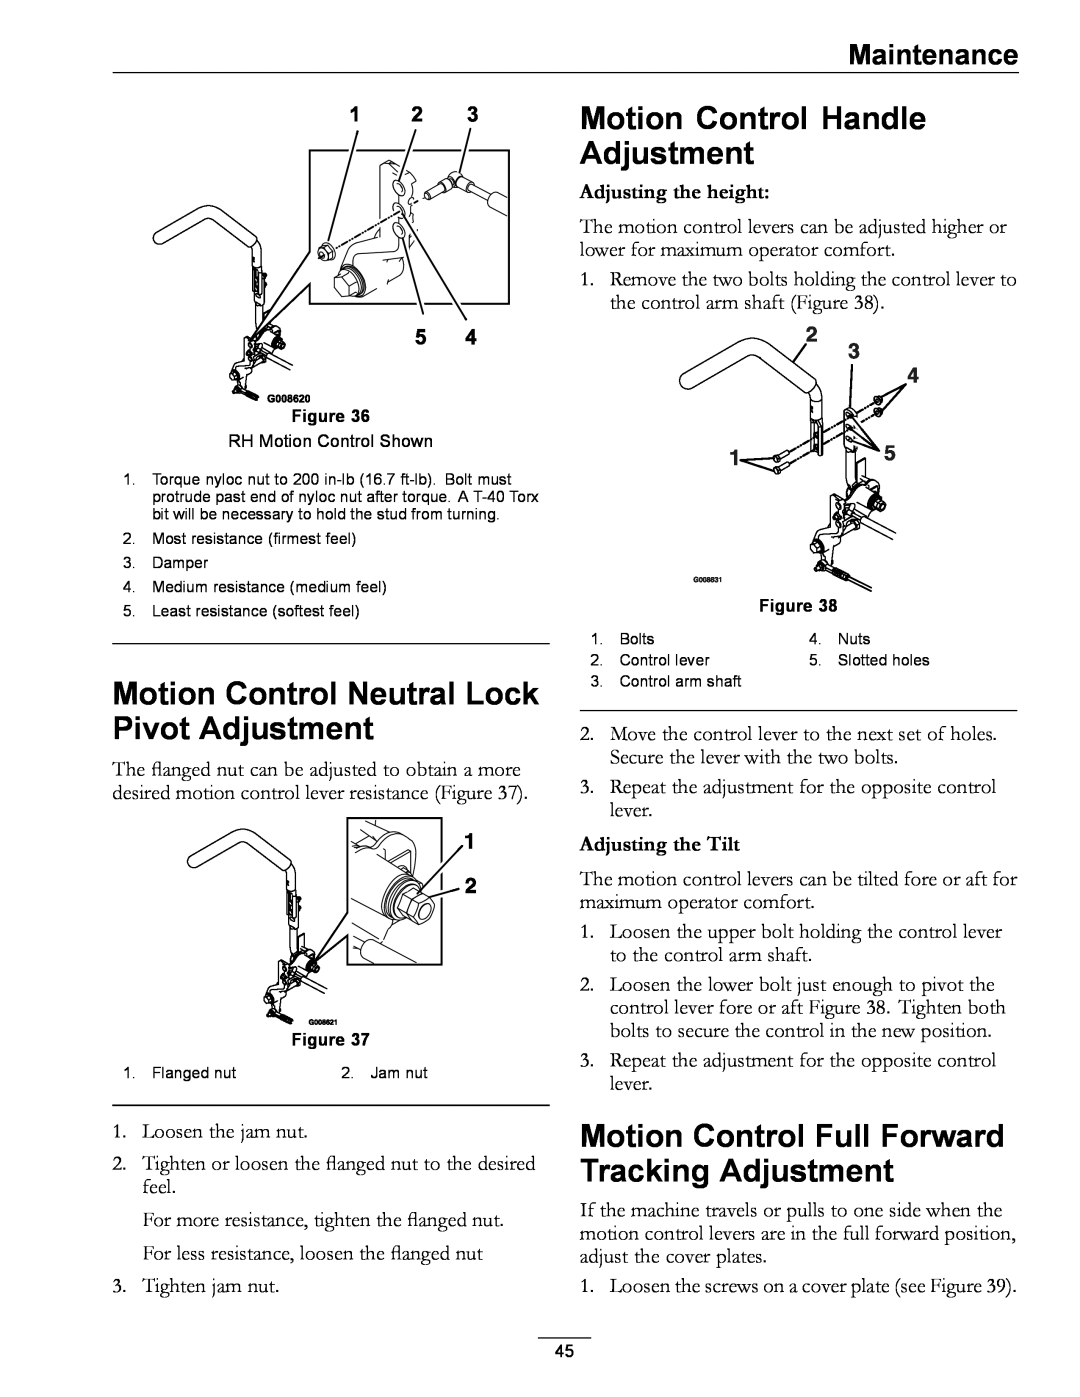 Exmark 000 & higher, 312 manual Motion Control Neutral Lock Pivot Adjustment, Motion Control Handle Adjustment, Maintenance 